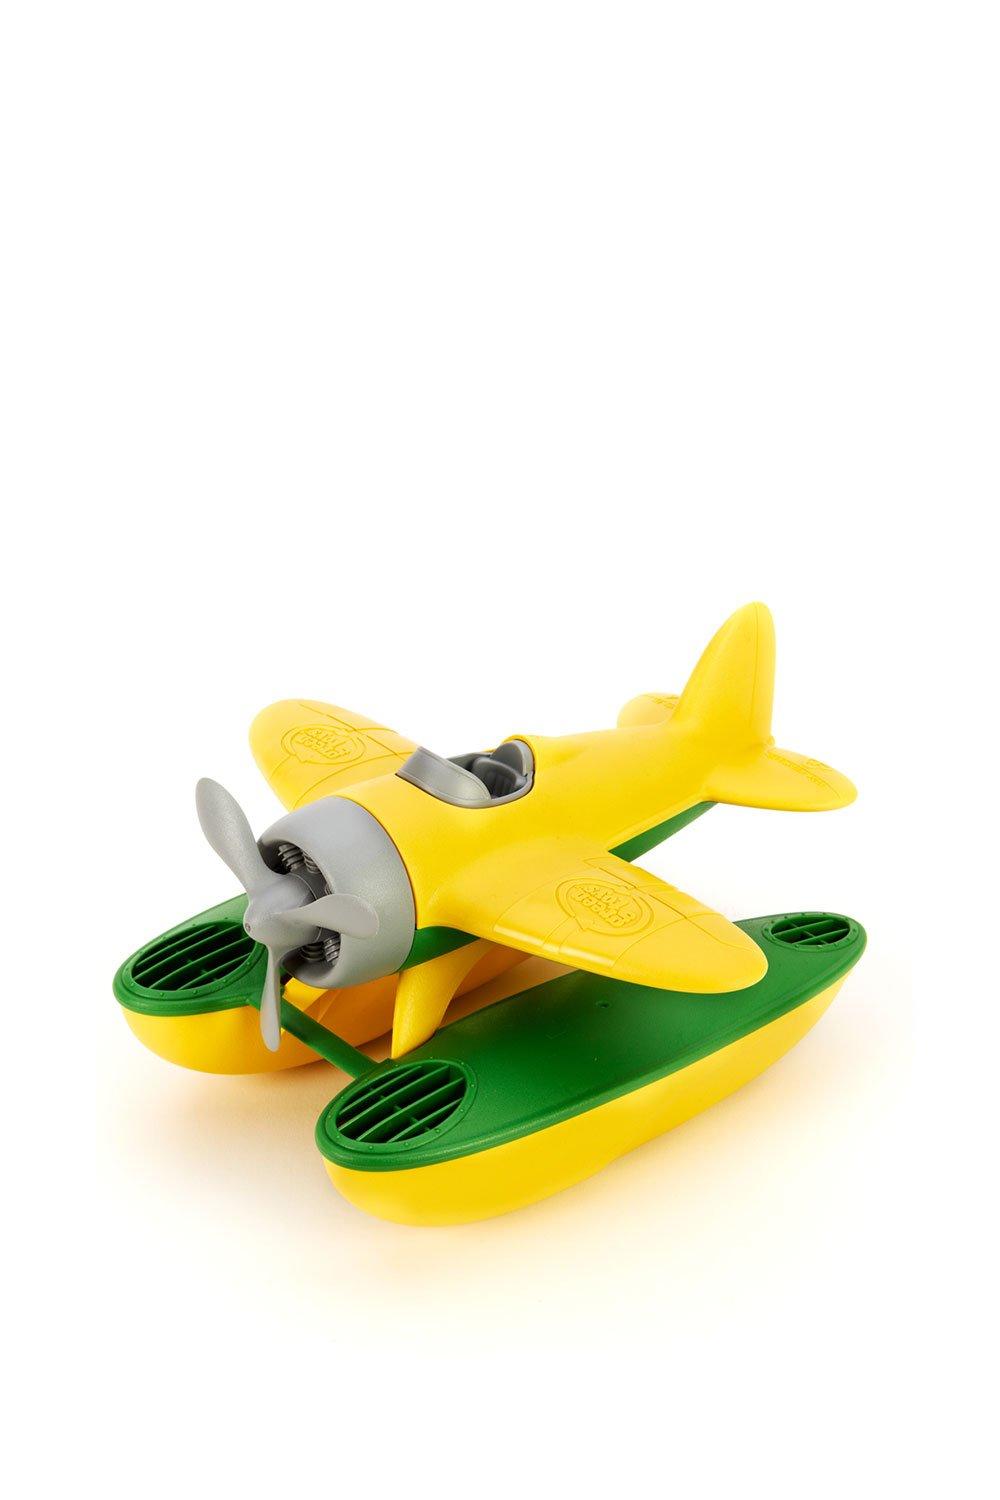 Green Toys Seaplane Water Toy|yellow